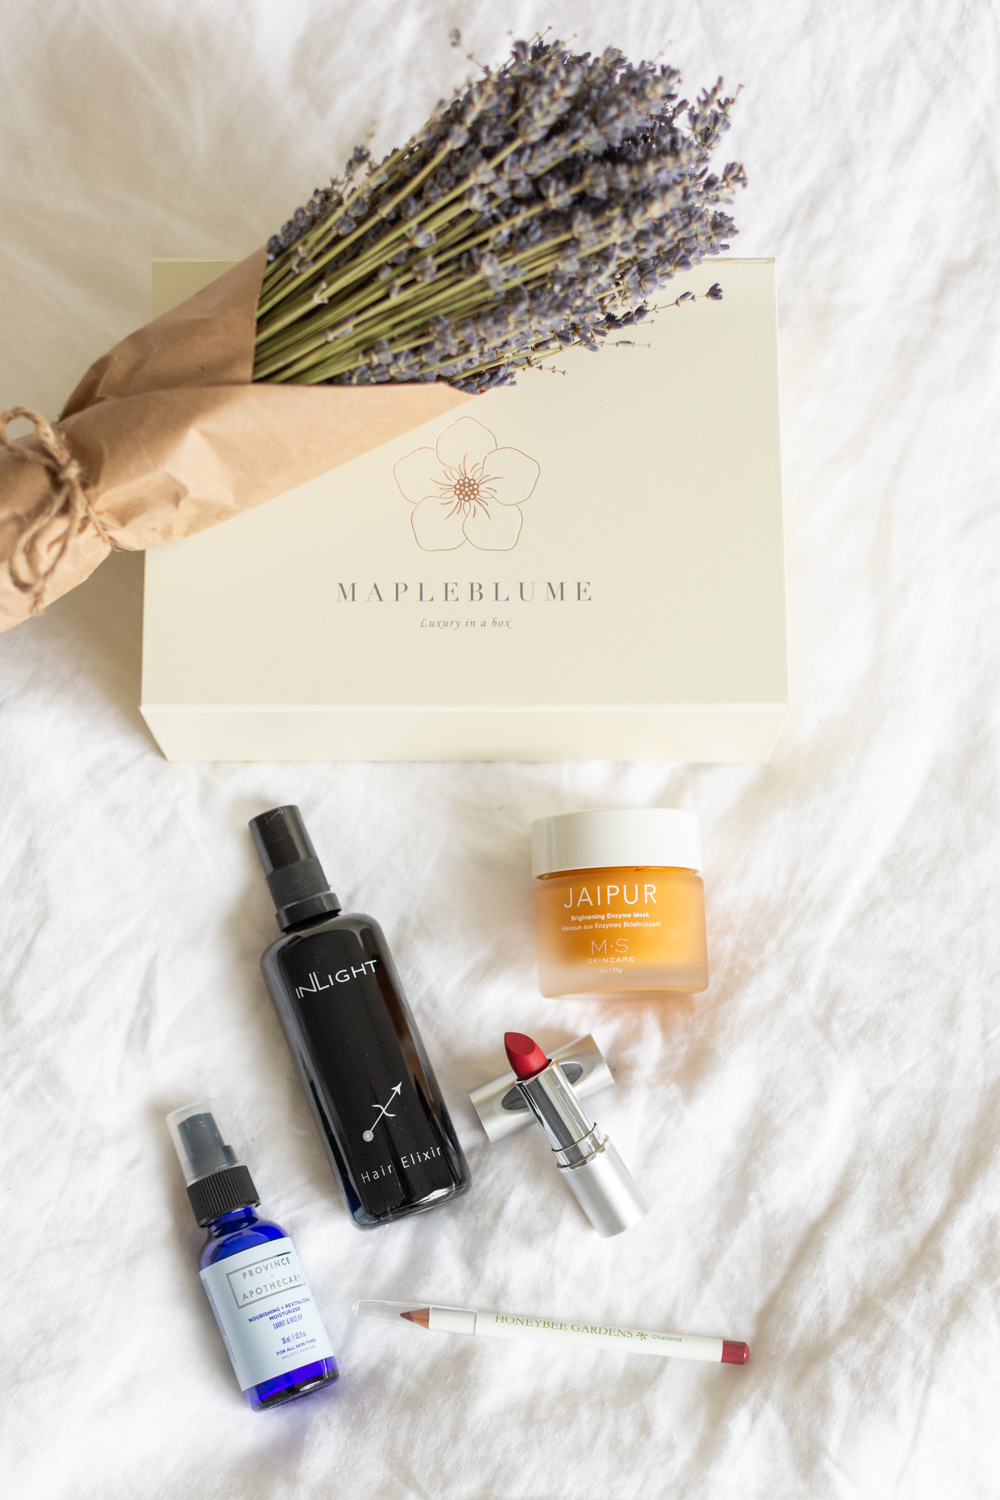 Mapleblume October 2019 Beauty Box